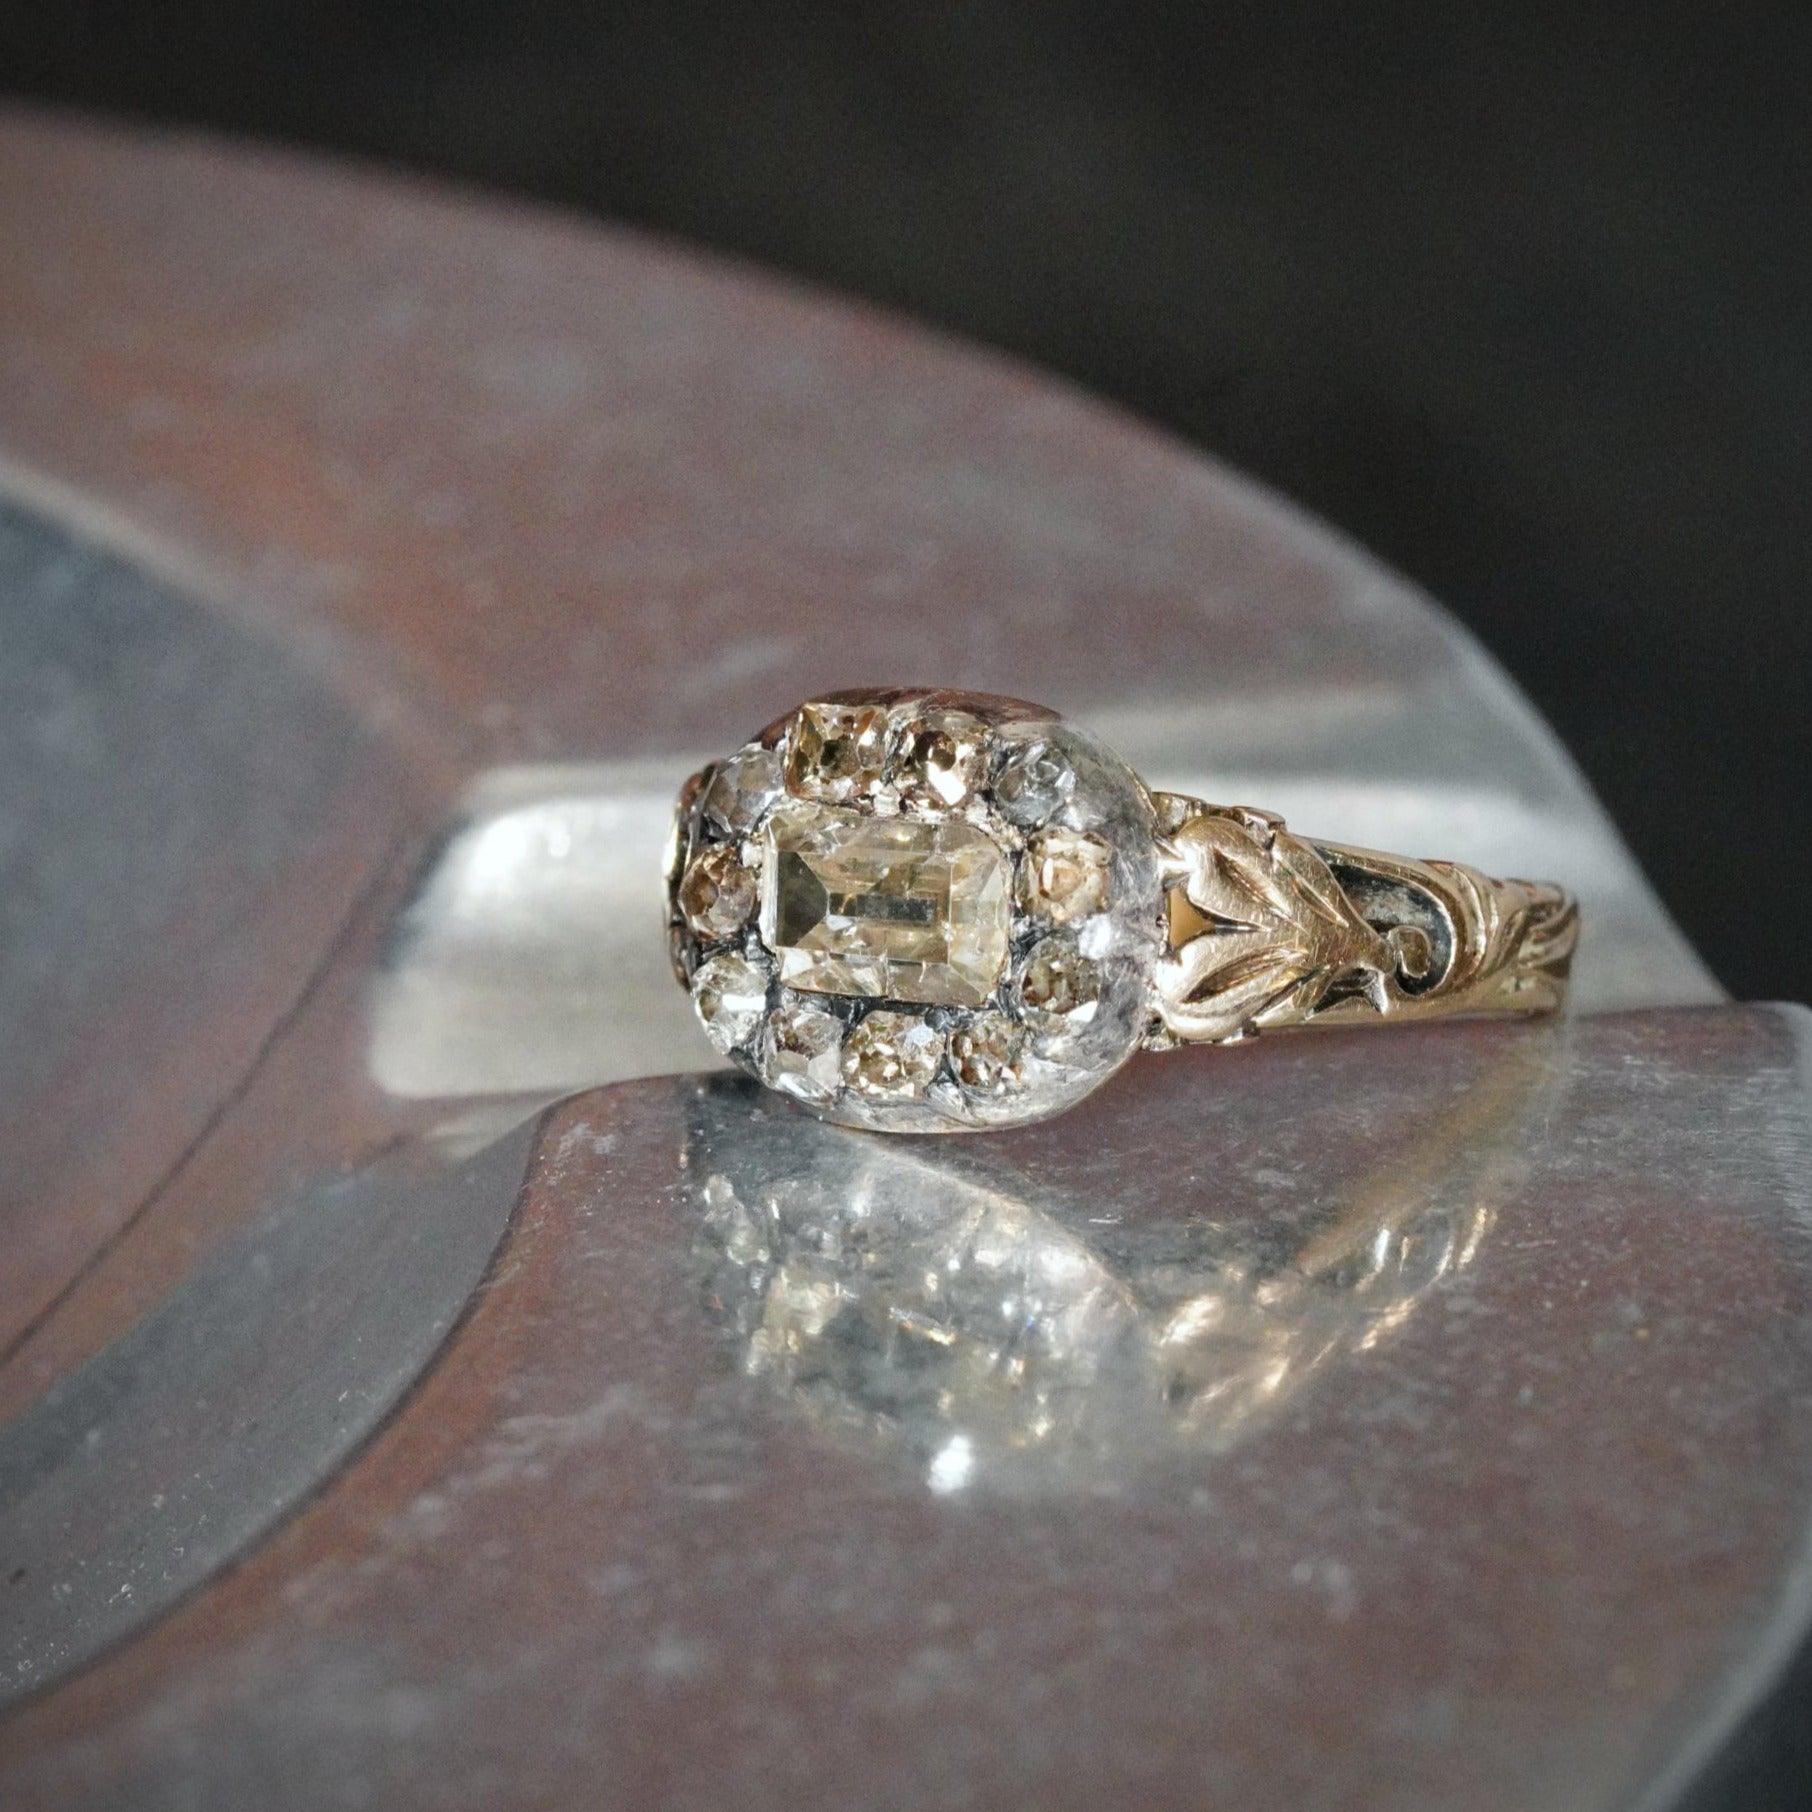 jogani Radiant White Table Cut Diamond, the Centerpiece of the Georgian Era Diamond Ring